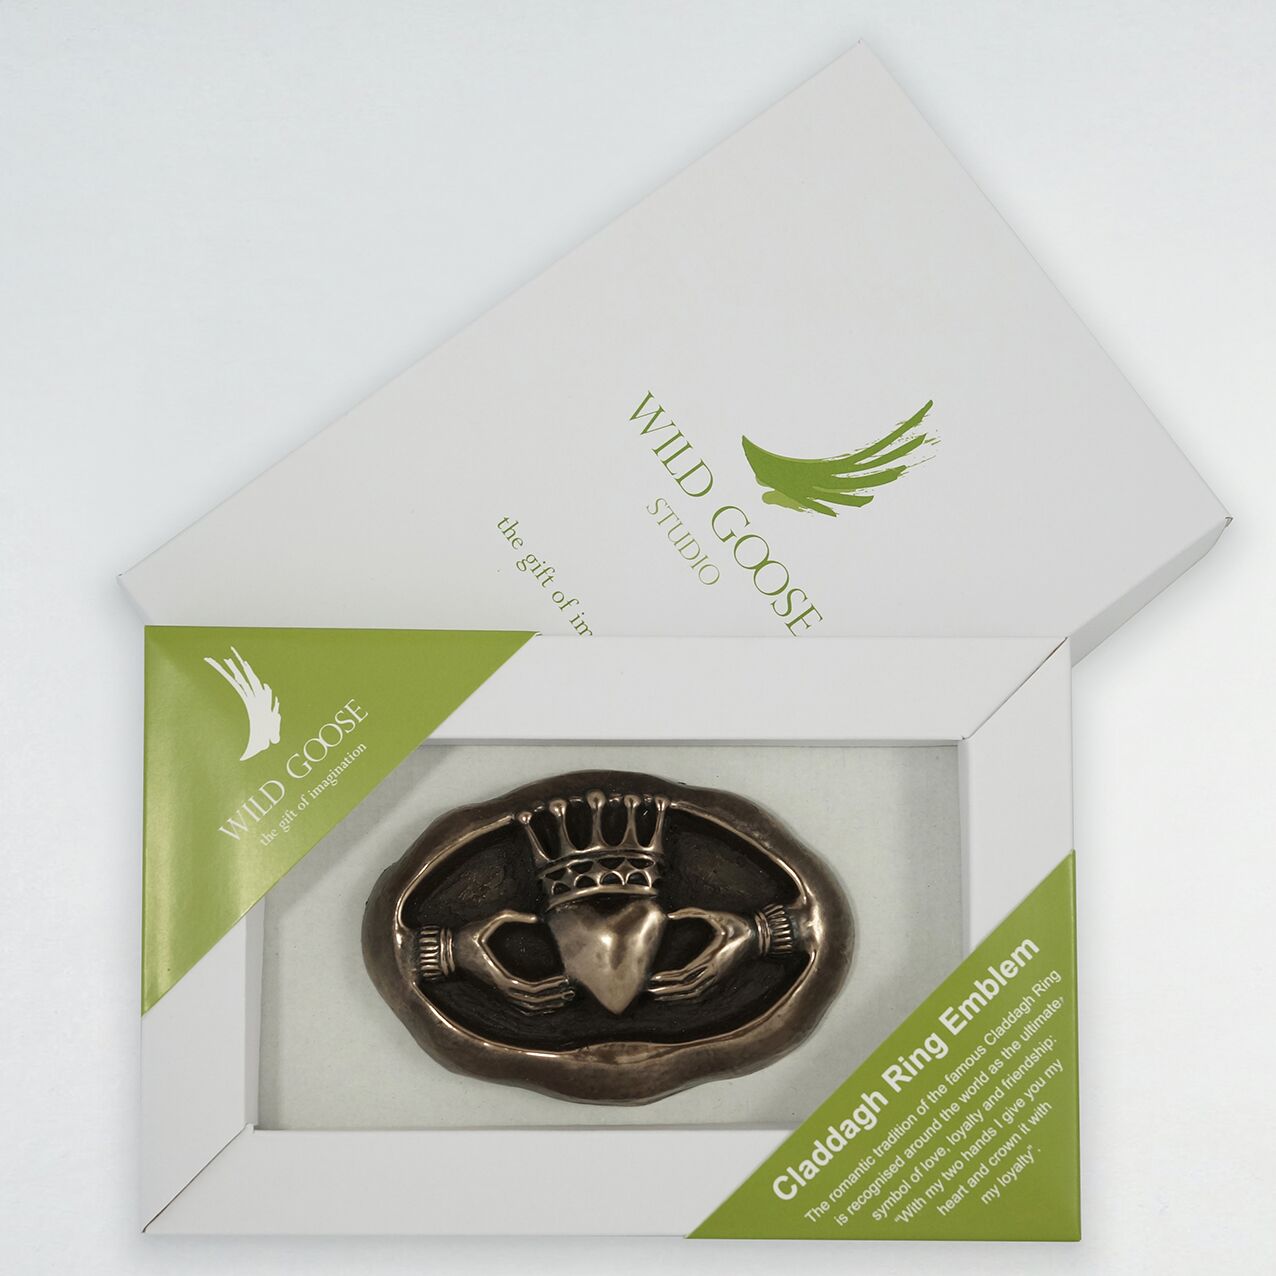 Claddagh Ring Emblem - Small Plaque